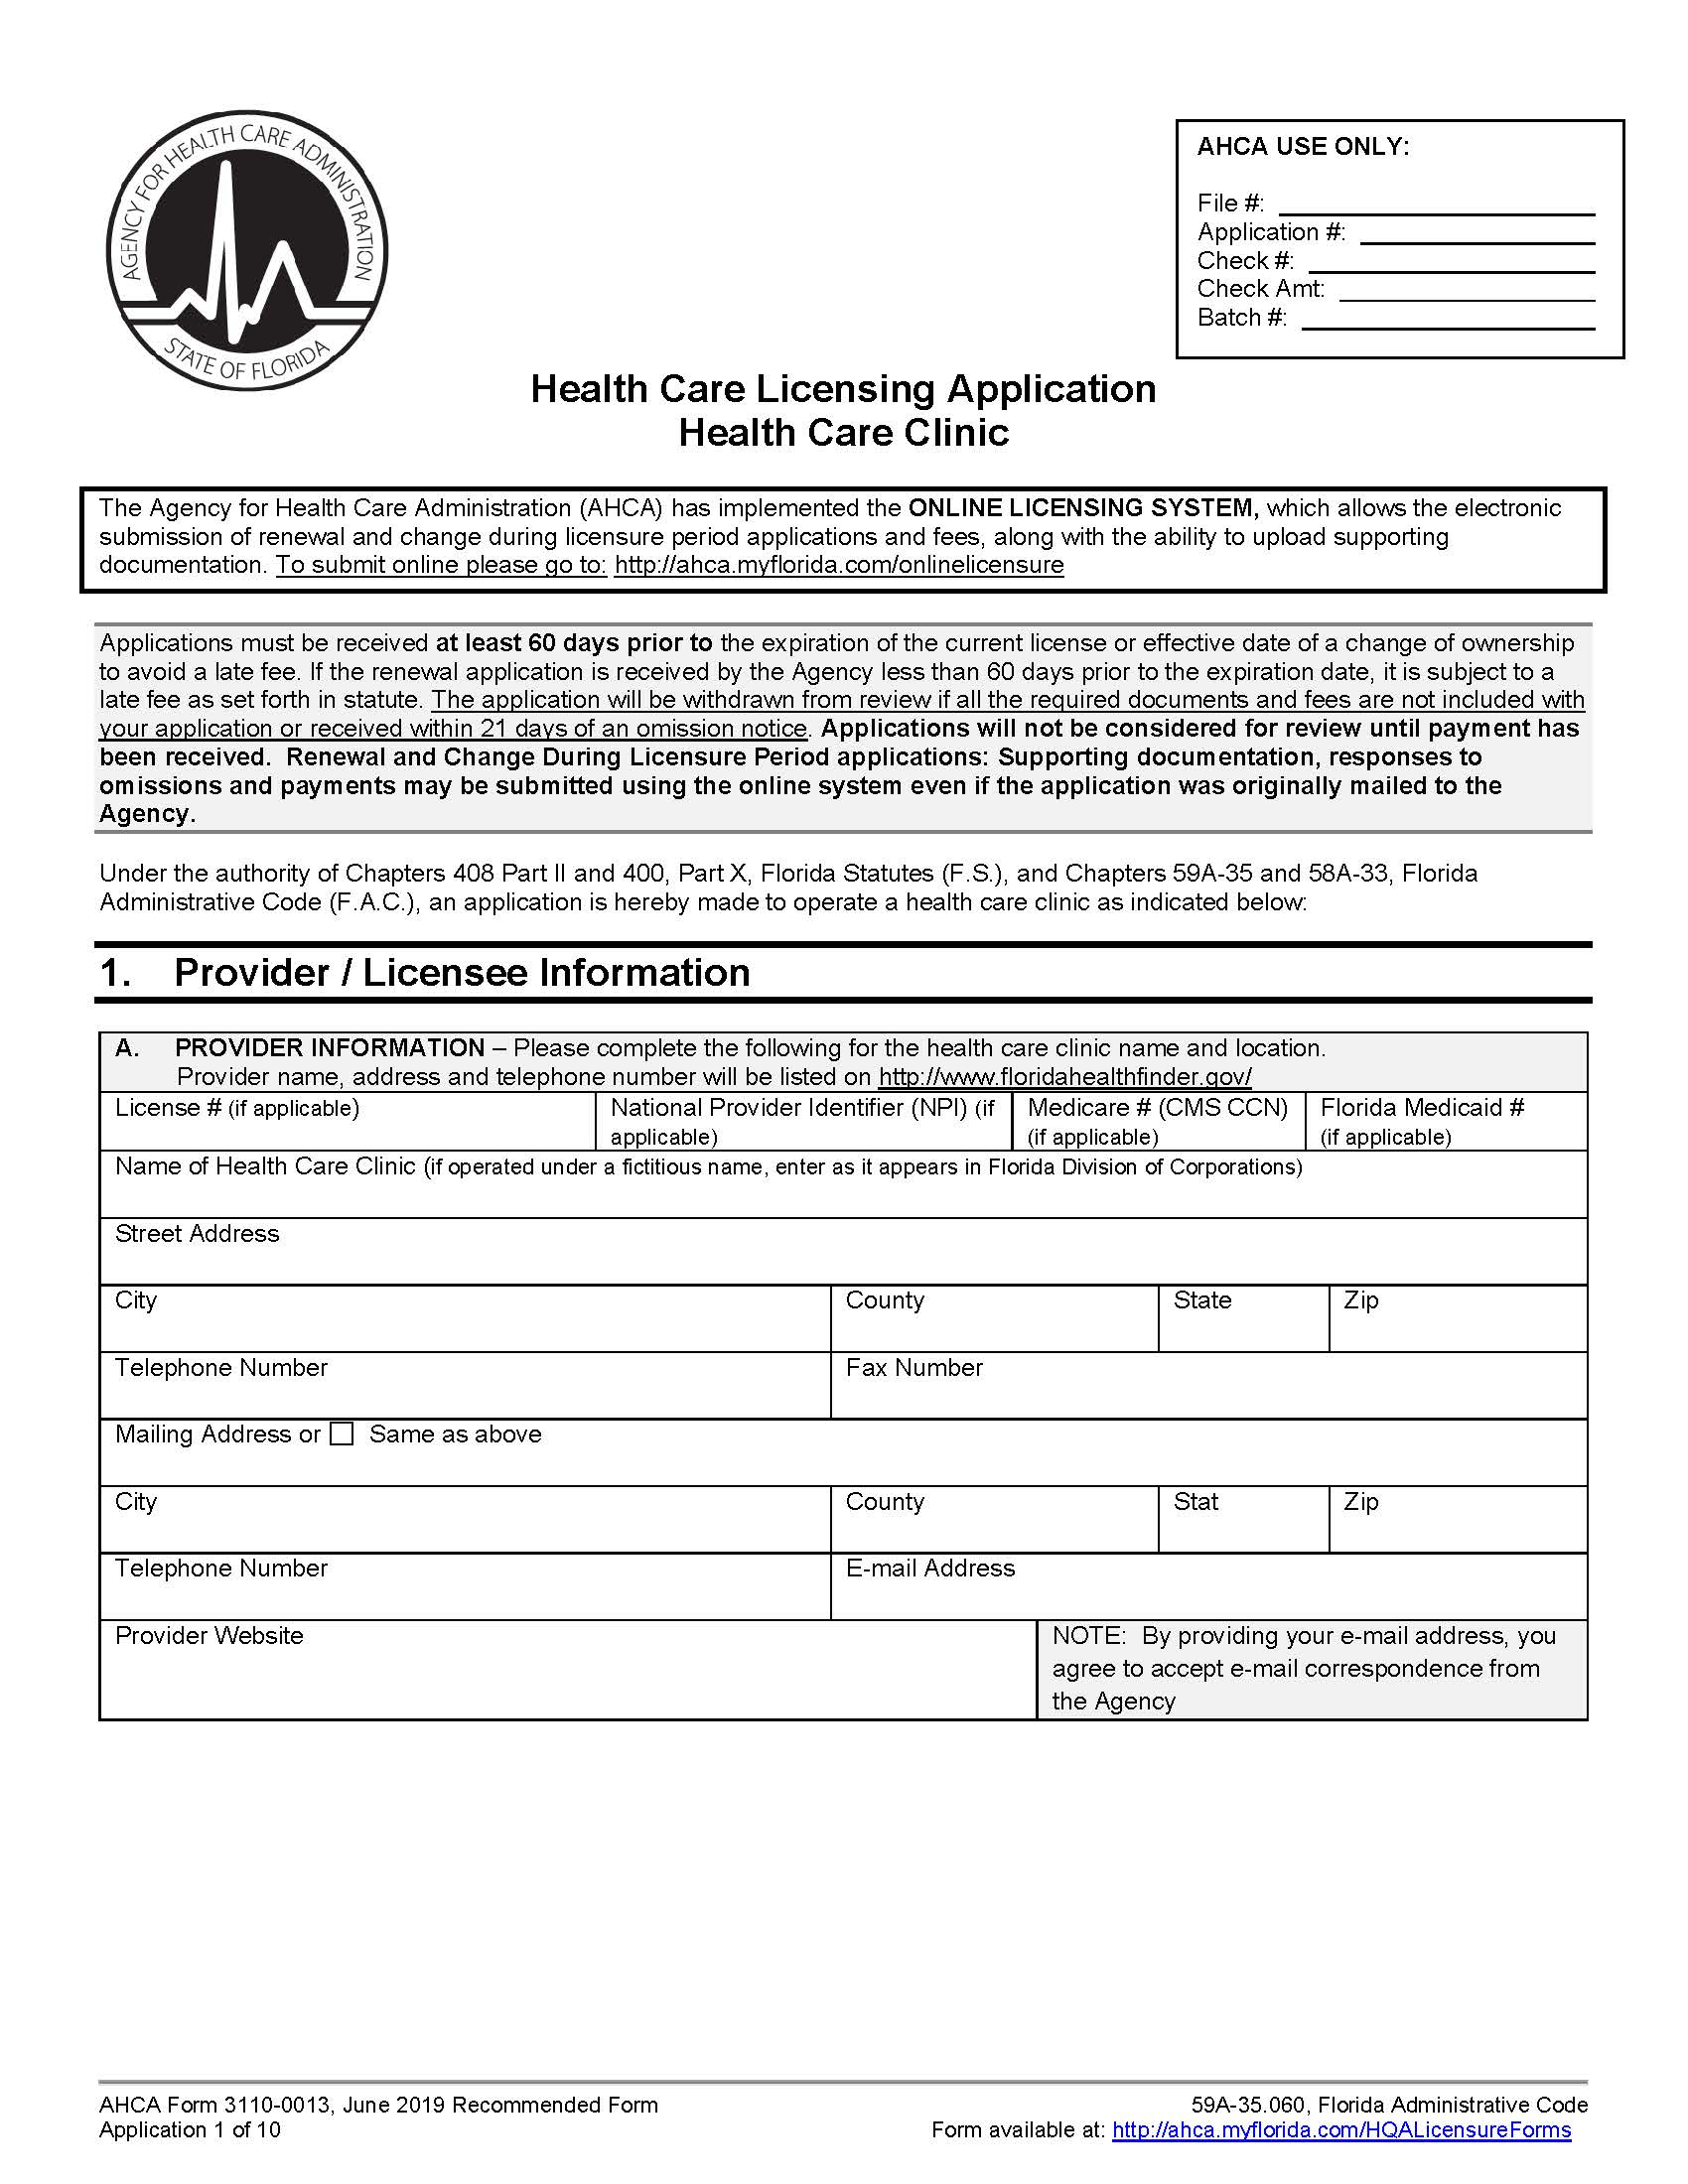 Health Care Licensure Application Health Care Clinic